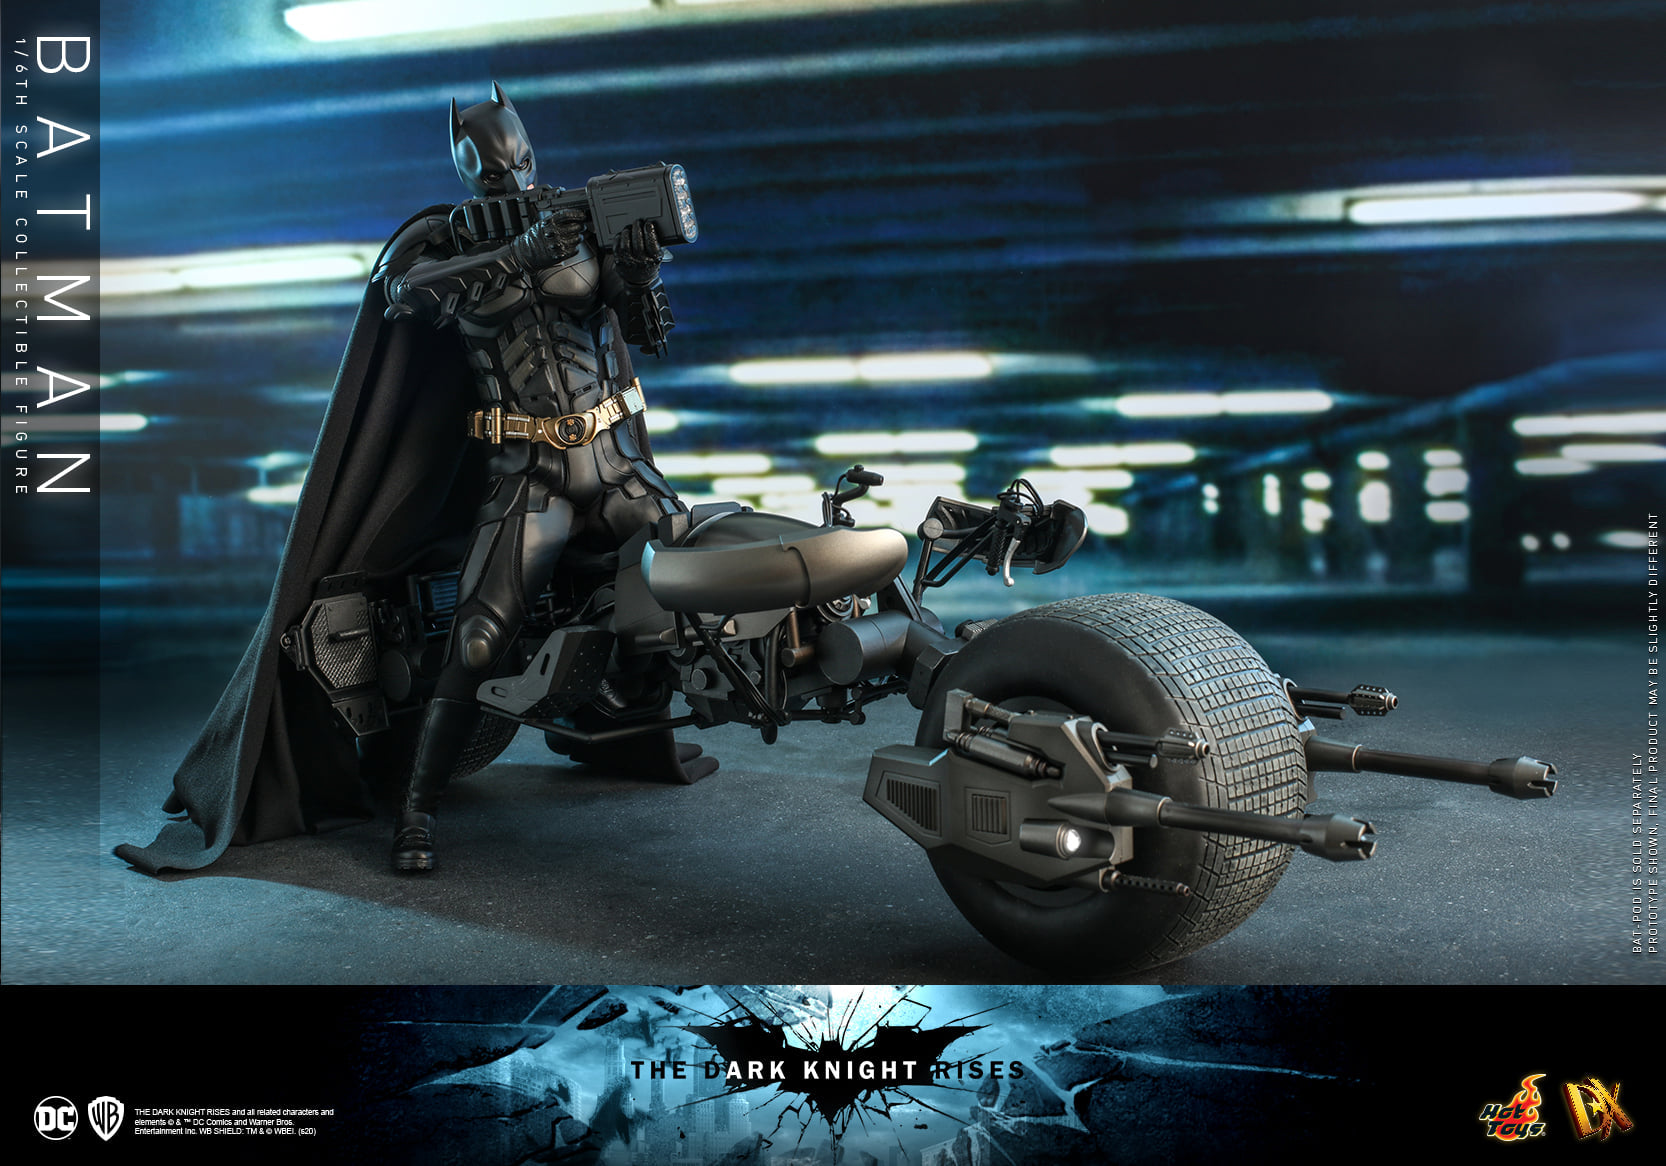 Hot Toys DX19 1/6 The Dark Knight Rises - Batman – Vintage Action